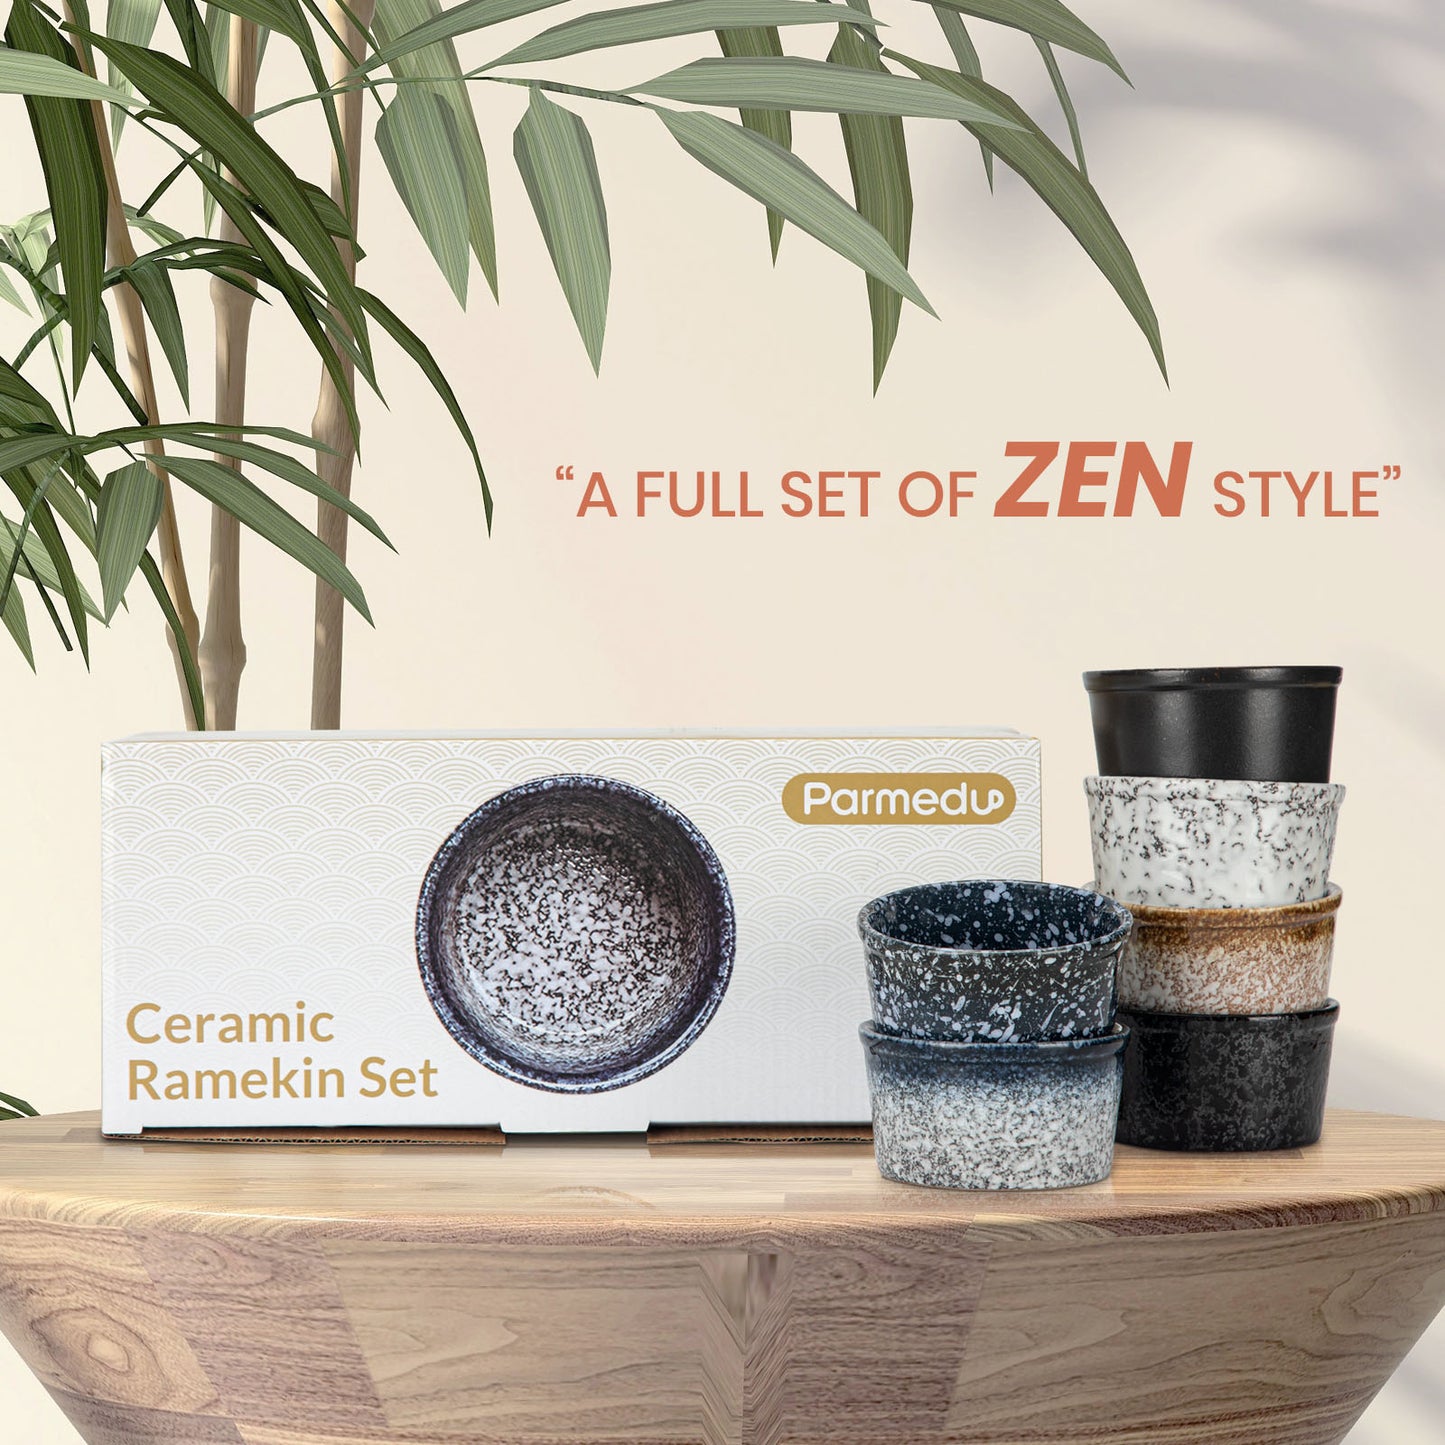 Ceramic Ramekin Set